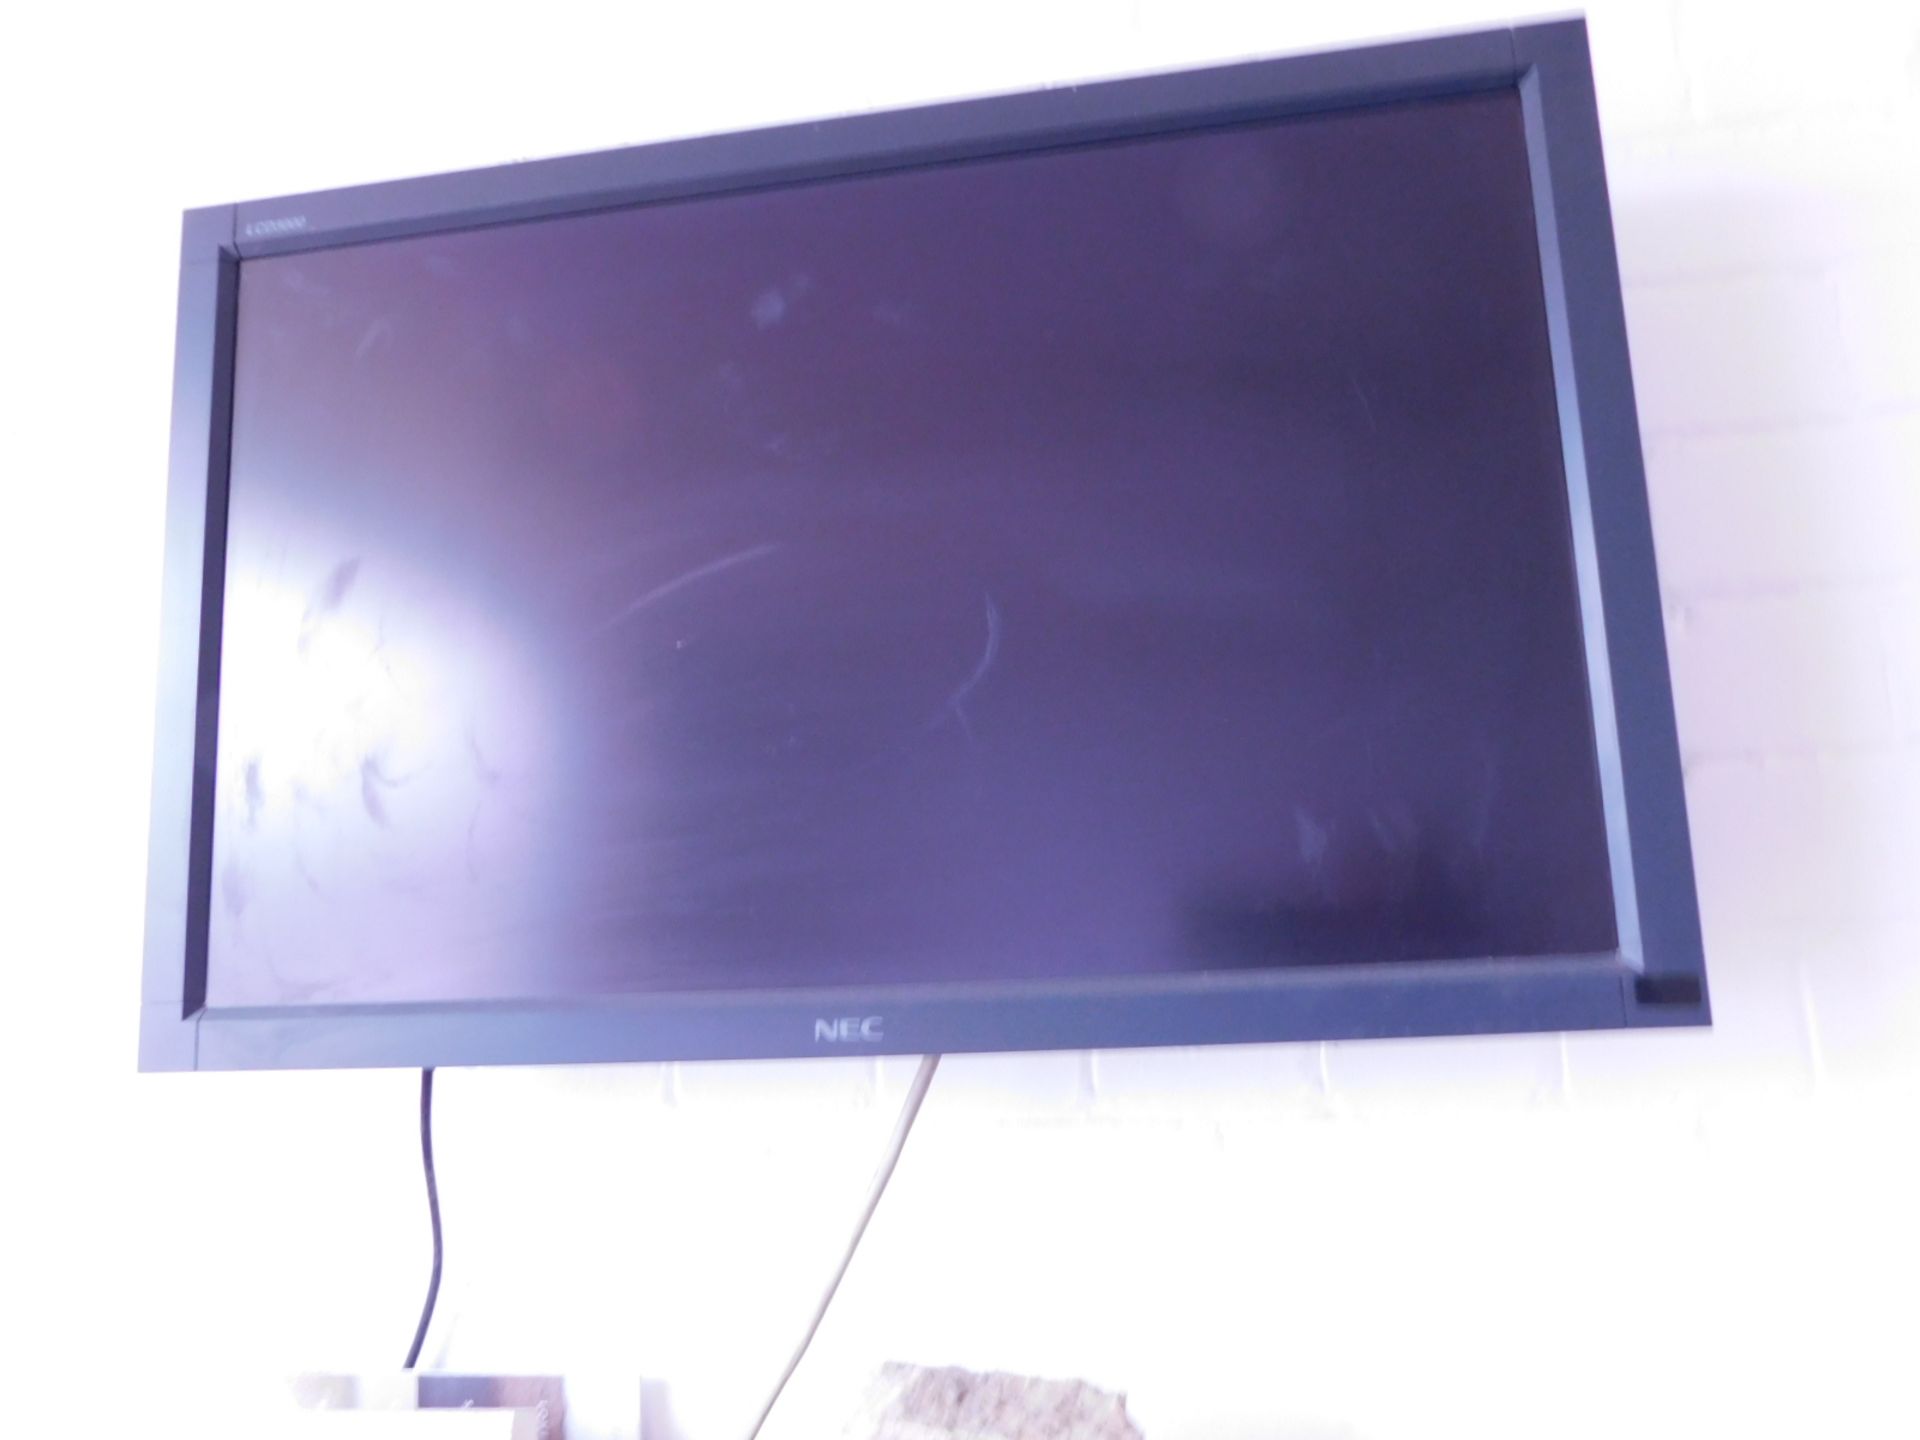 * NEC LCD Wall mounted tv monitor